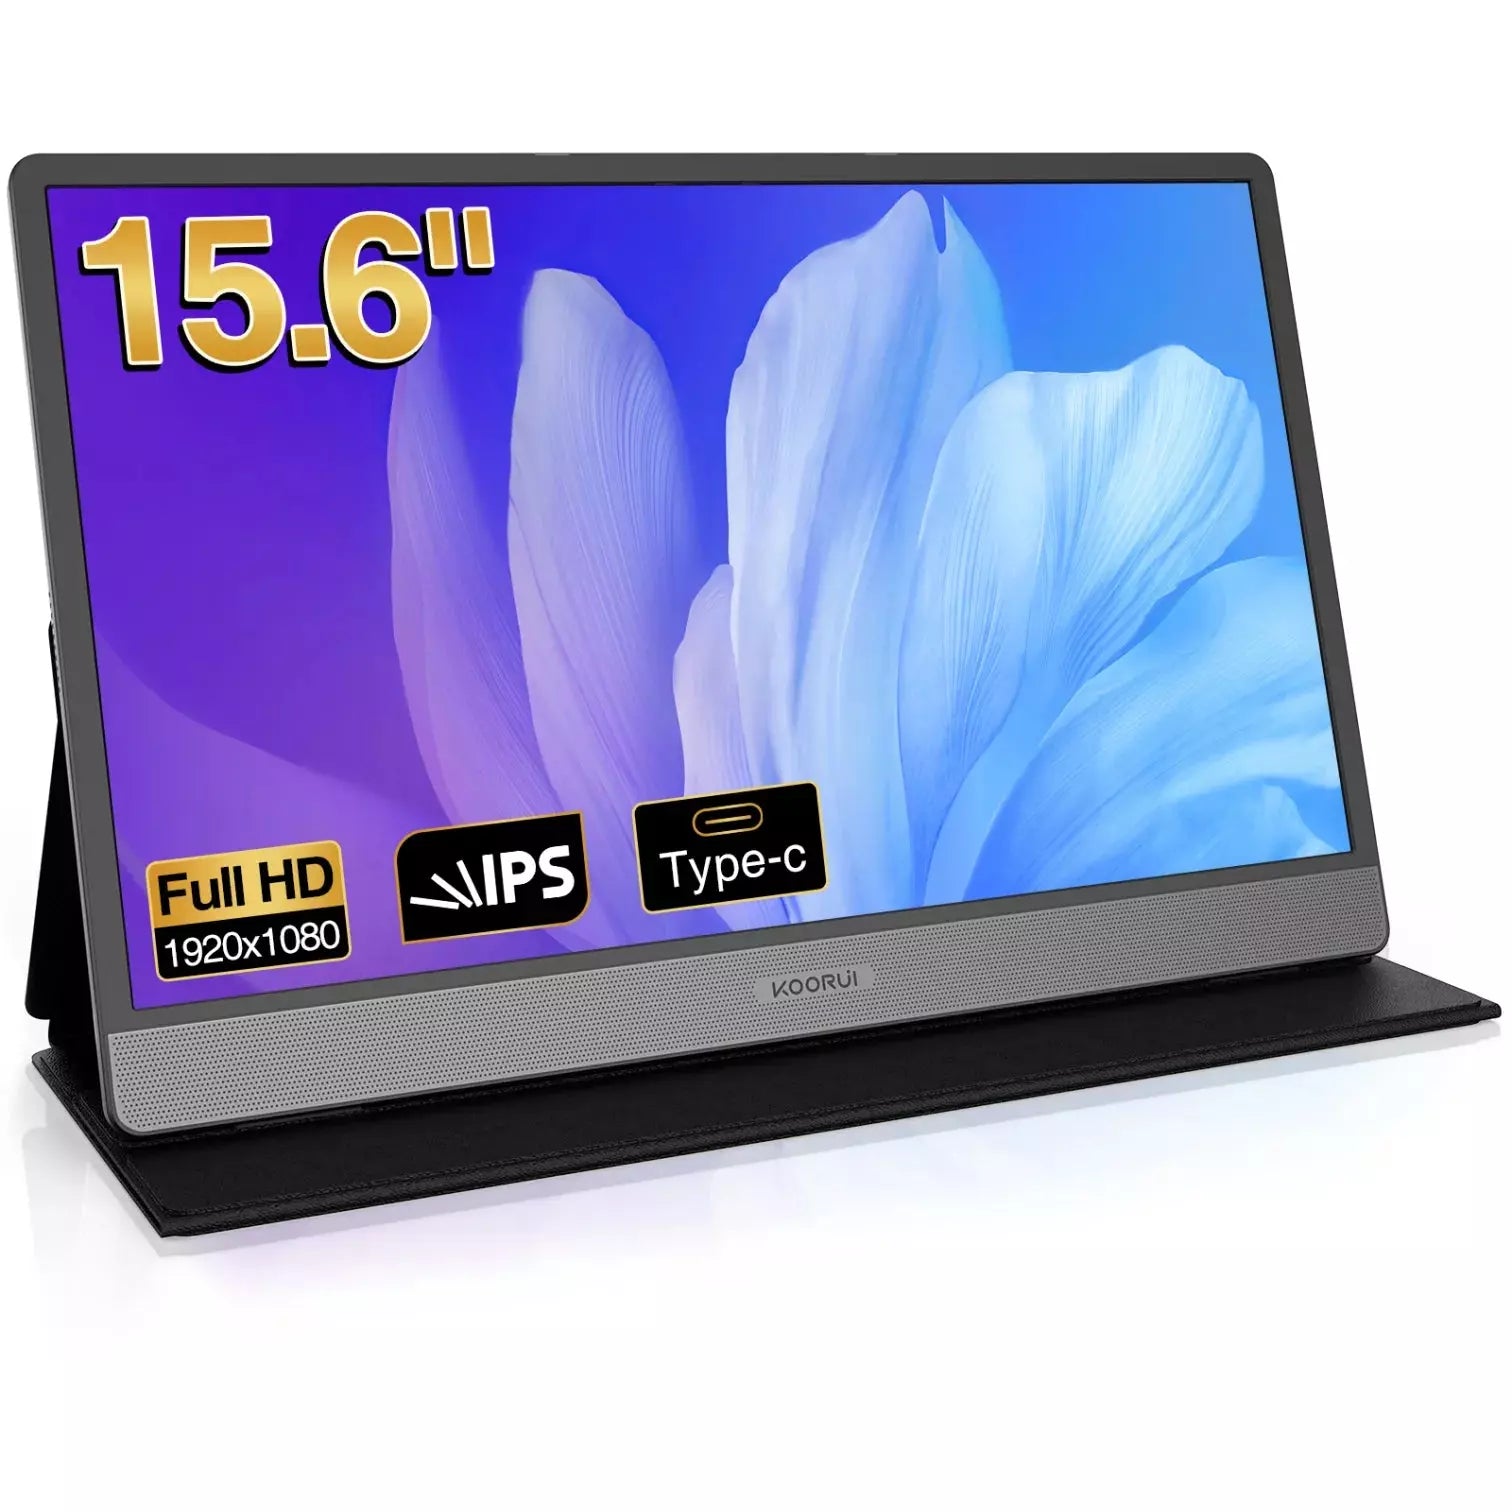 Slate Blue Koorui 15B1 15.6" IPS Full HD 1920 x 1080 60Hz Portable Monitor